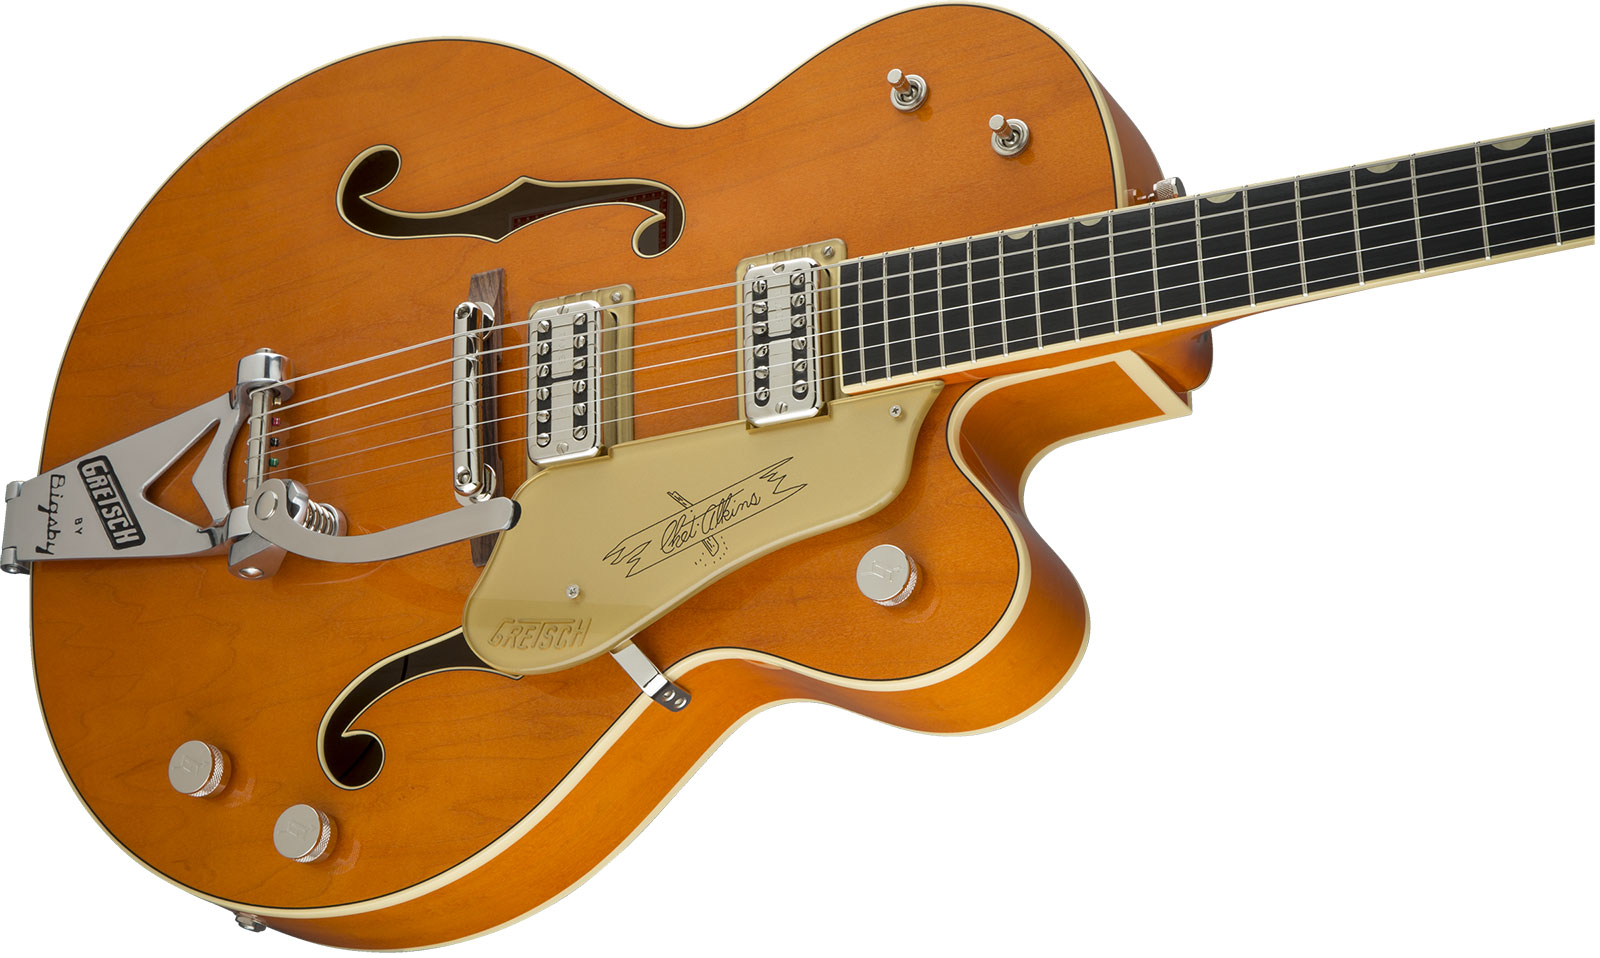 Gretsch Chet Atkins G6120t-59 Vintage Select 1959 Bigsby Pro Jap 2h Tv Jones Trem Eb - Vintage Orange Stain - Guitare Électrique 3/4 Caisse & Jazz - V